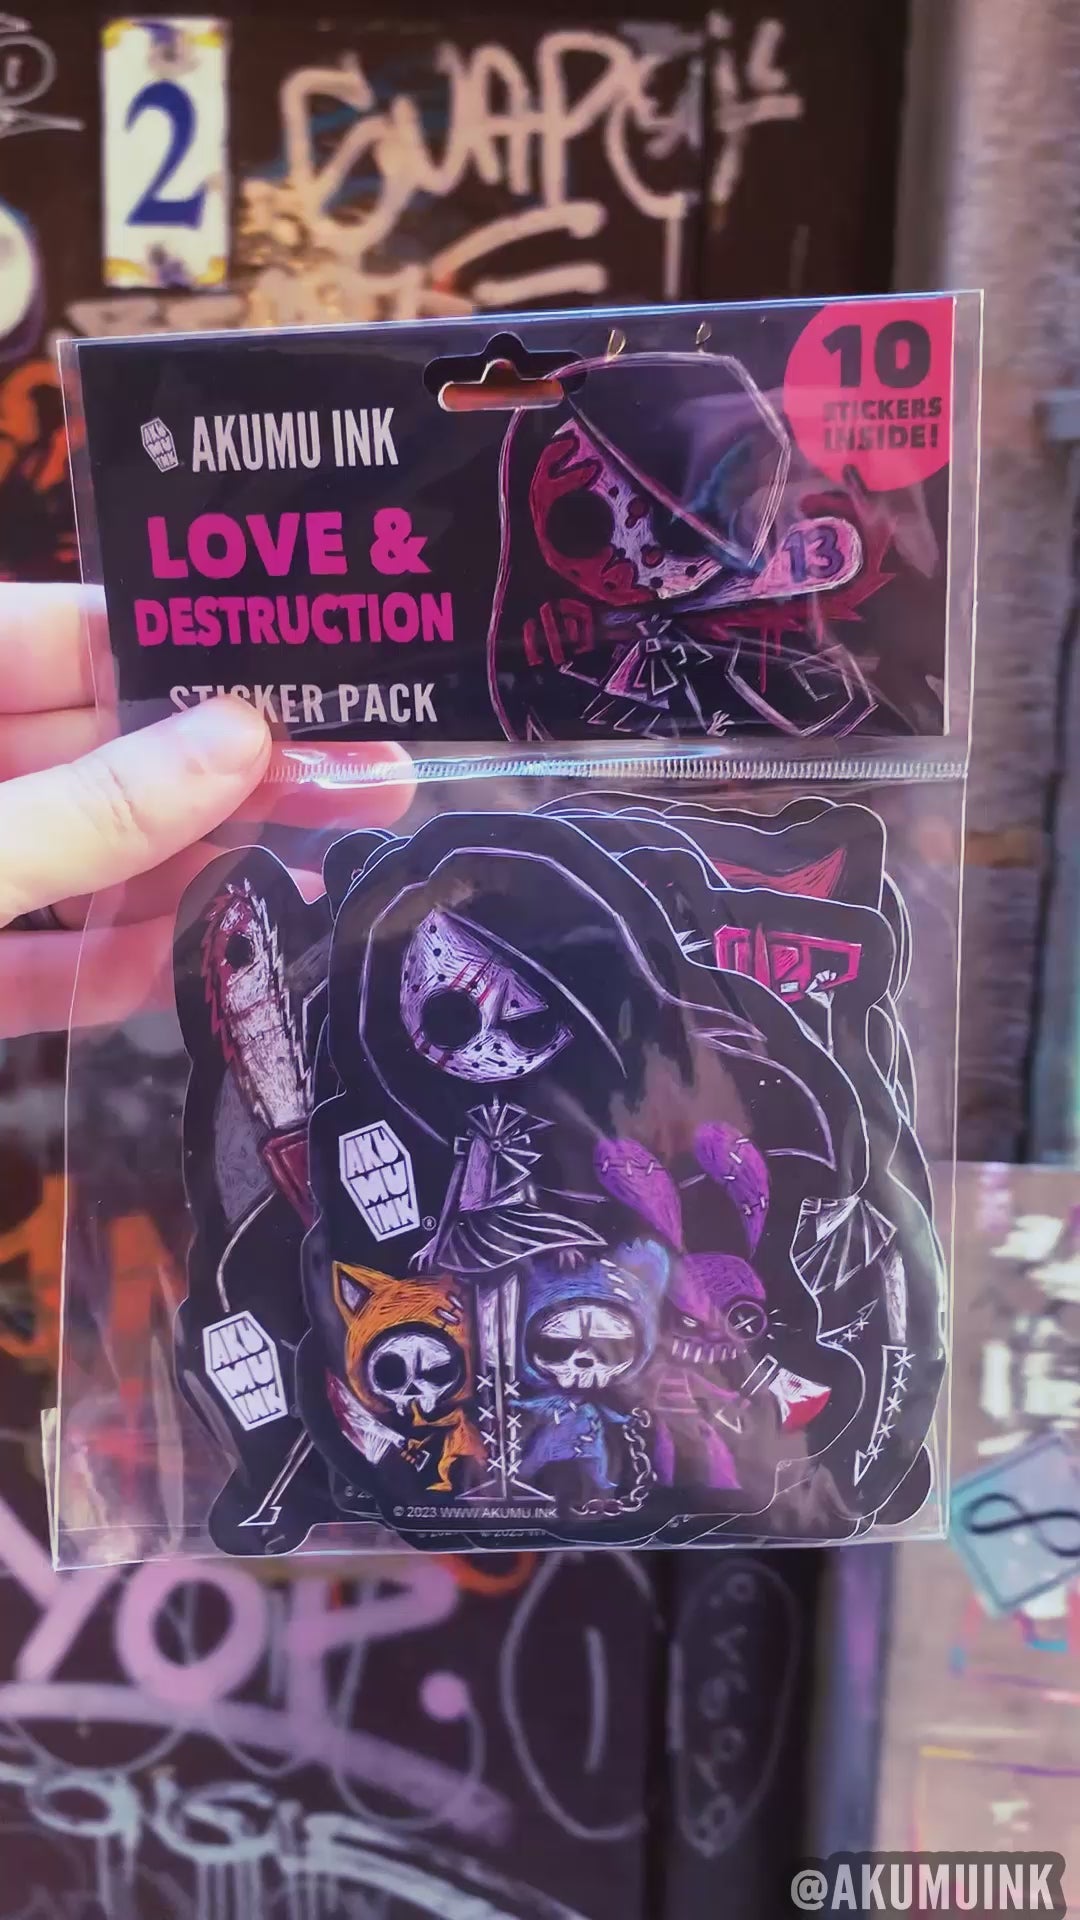 Love & Destruction Sticker Pack